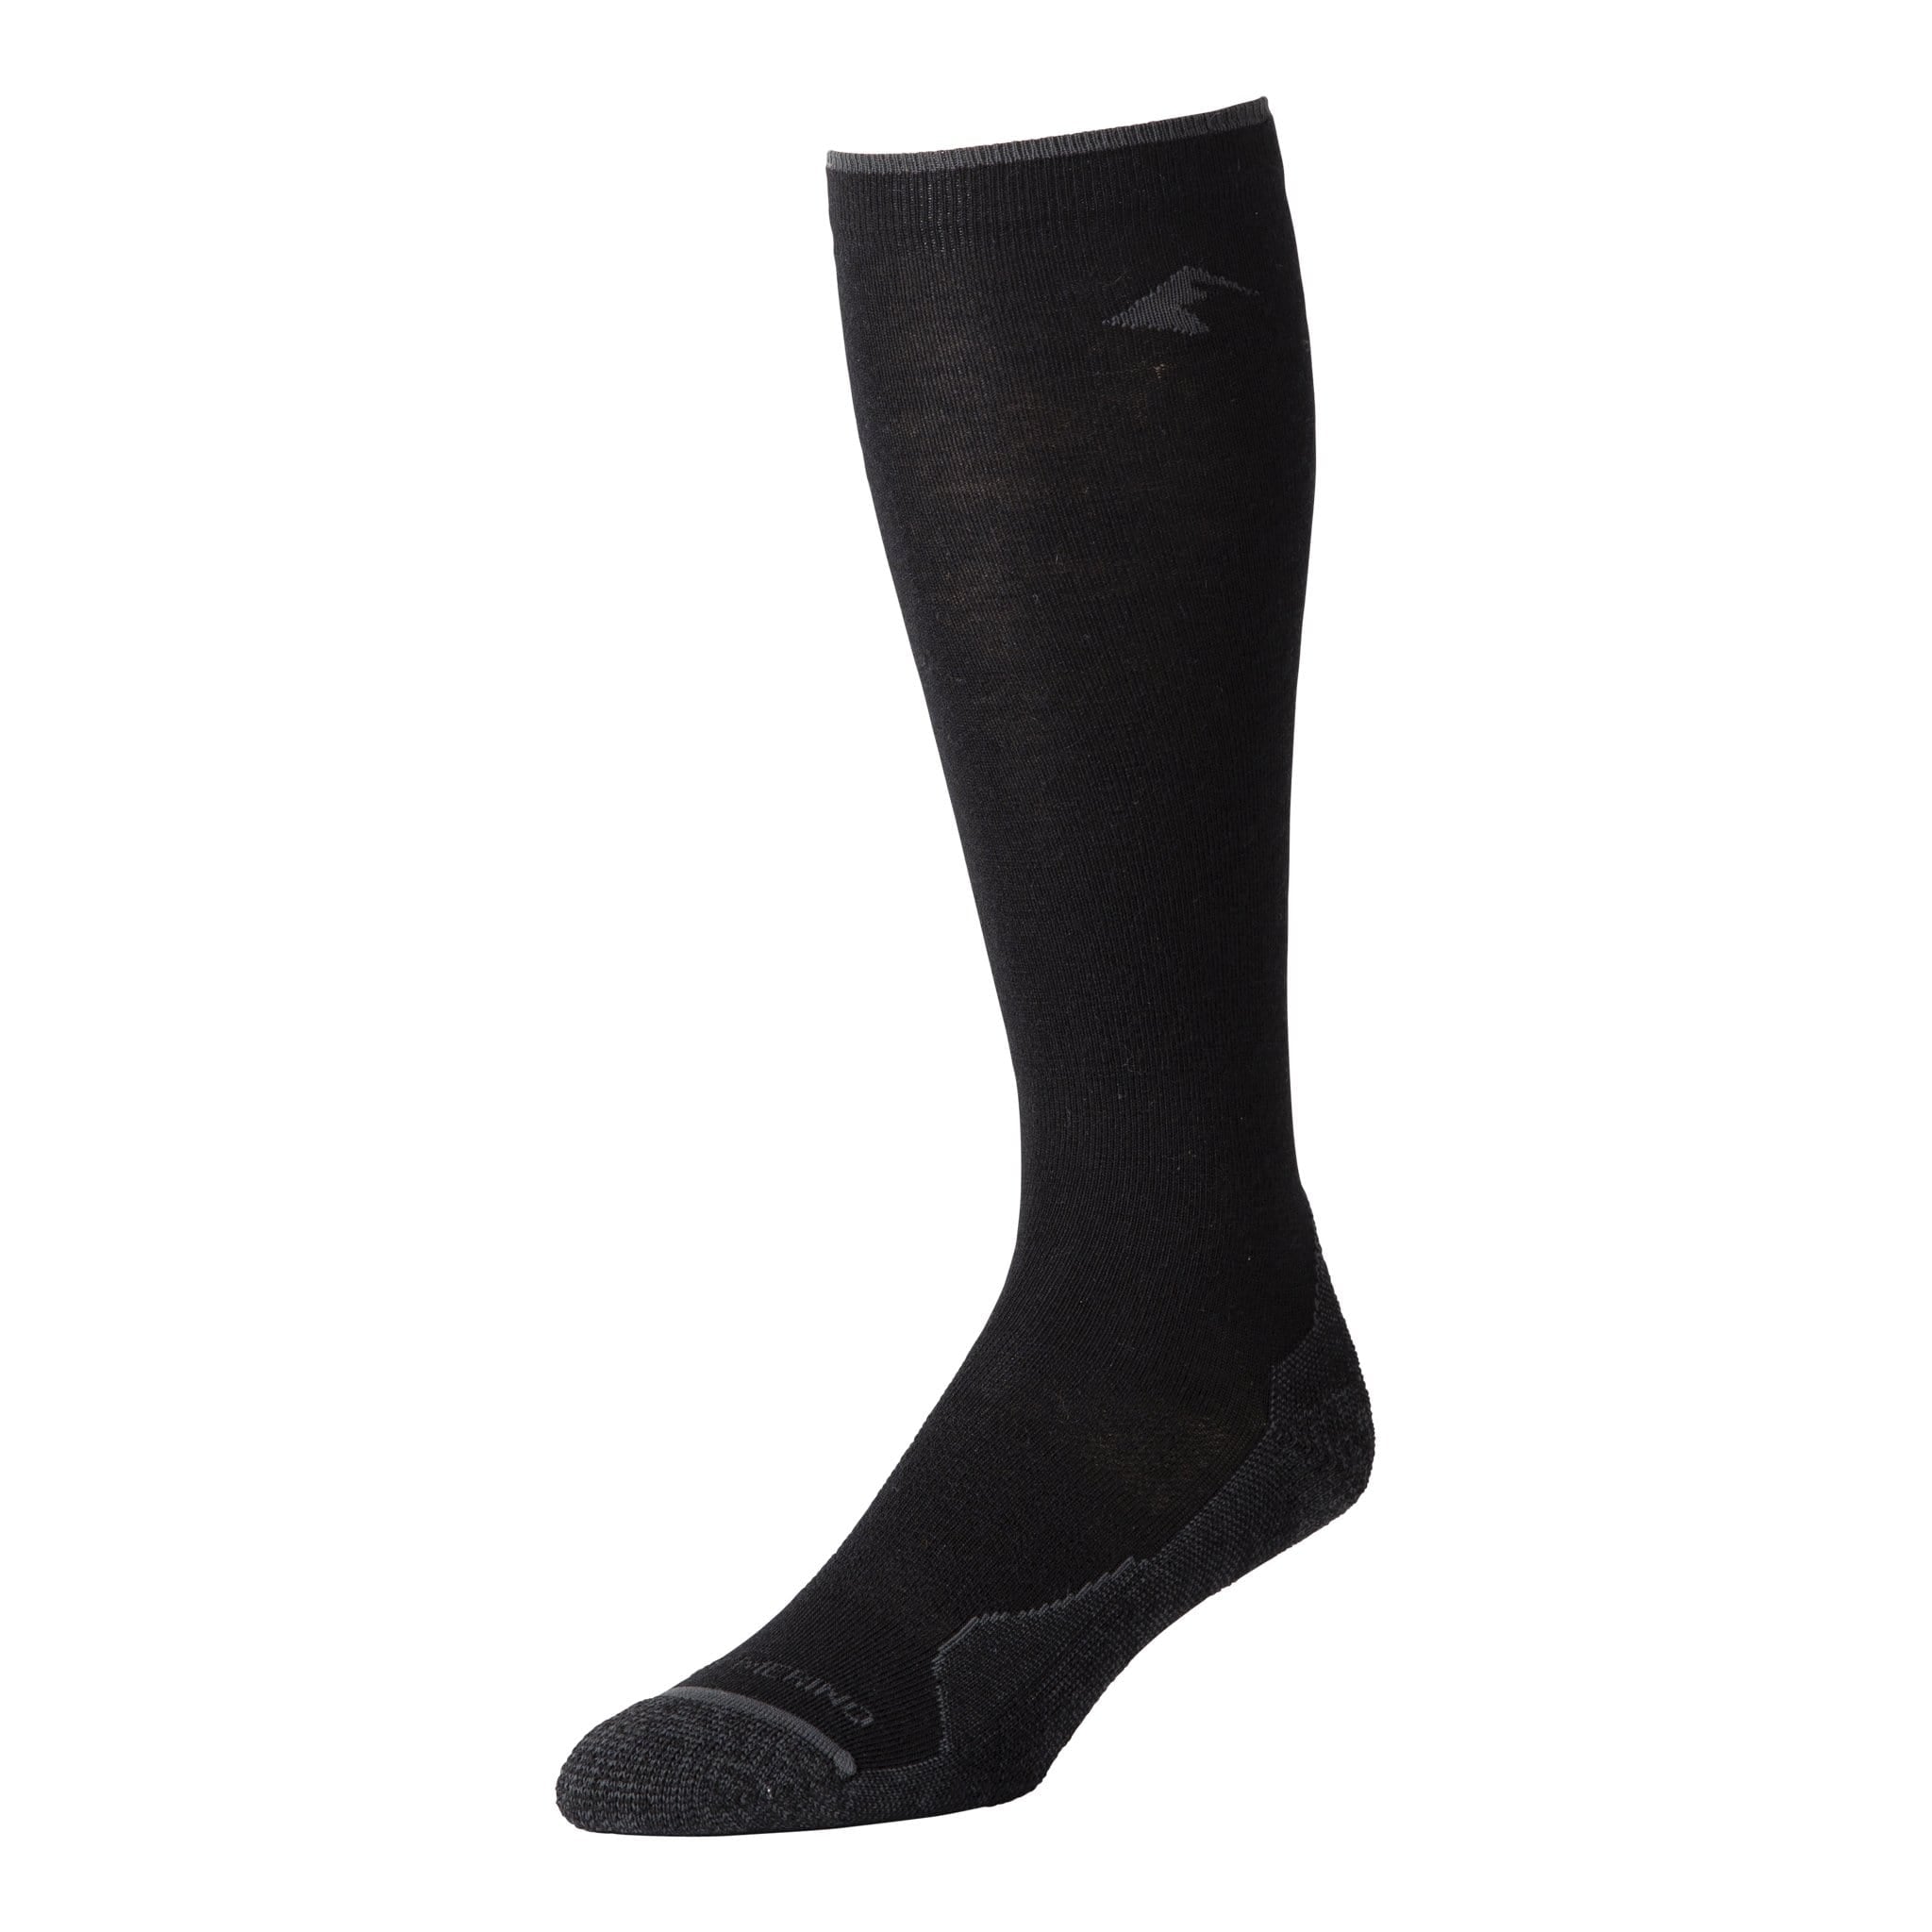 Dropout Lightweight Merino Wool Ski Socks